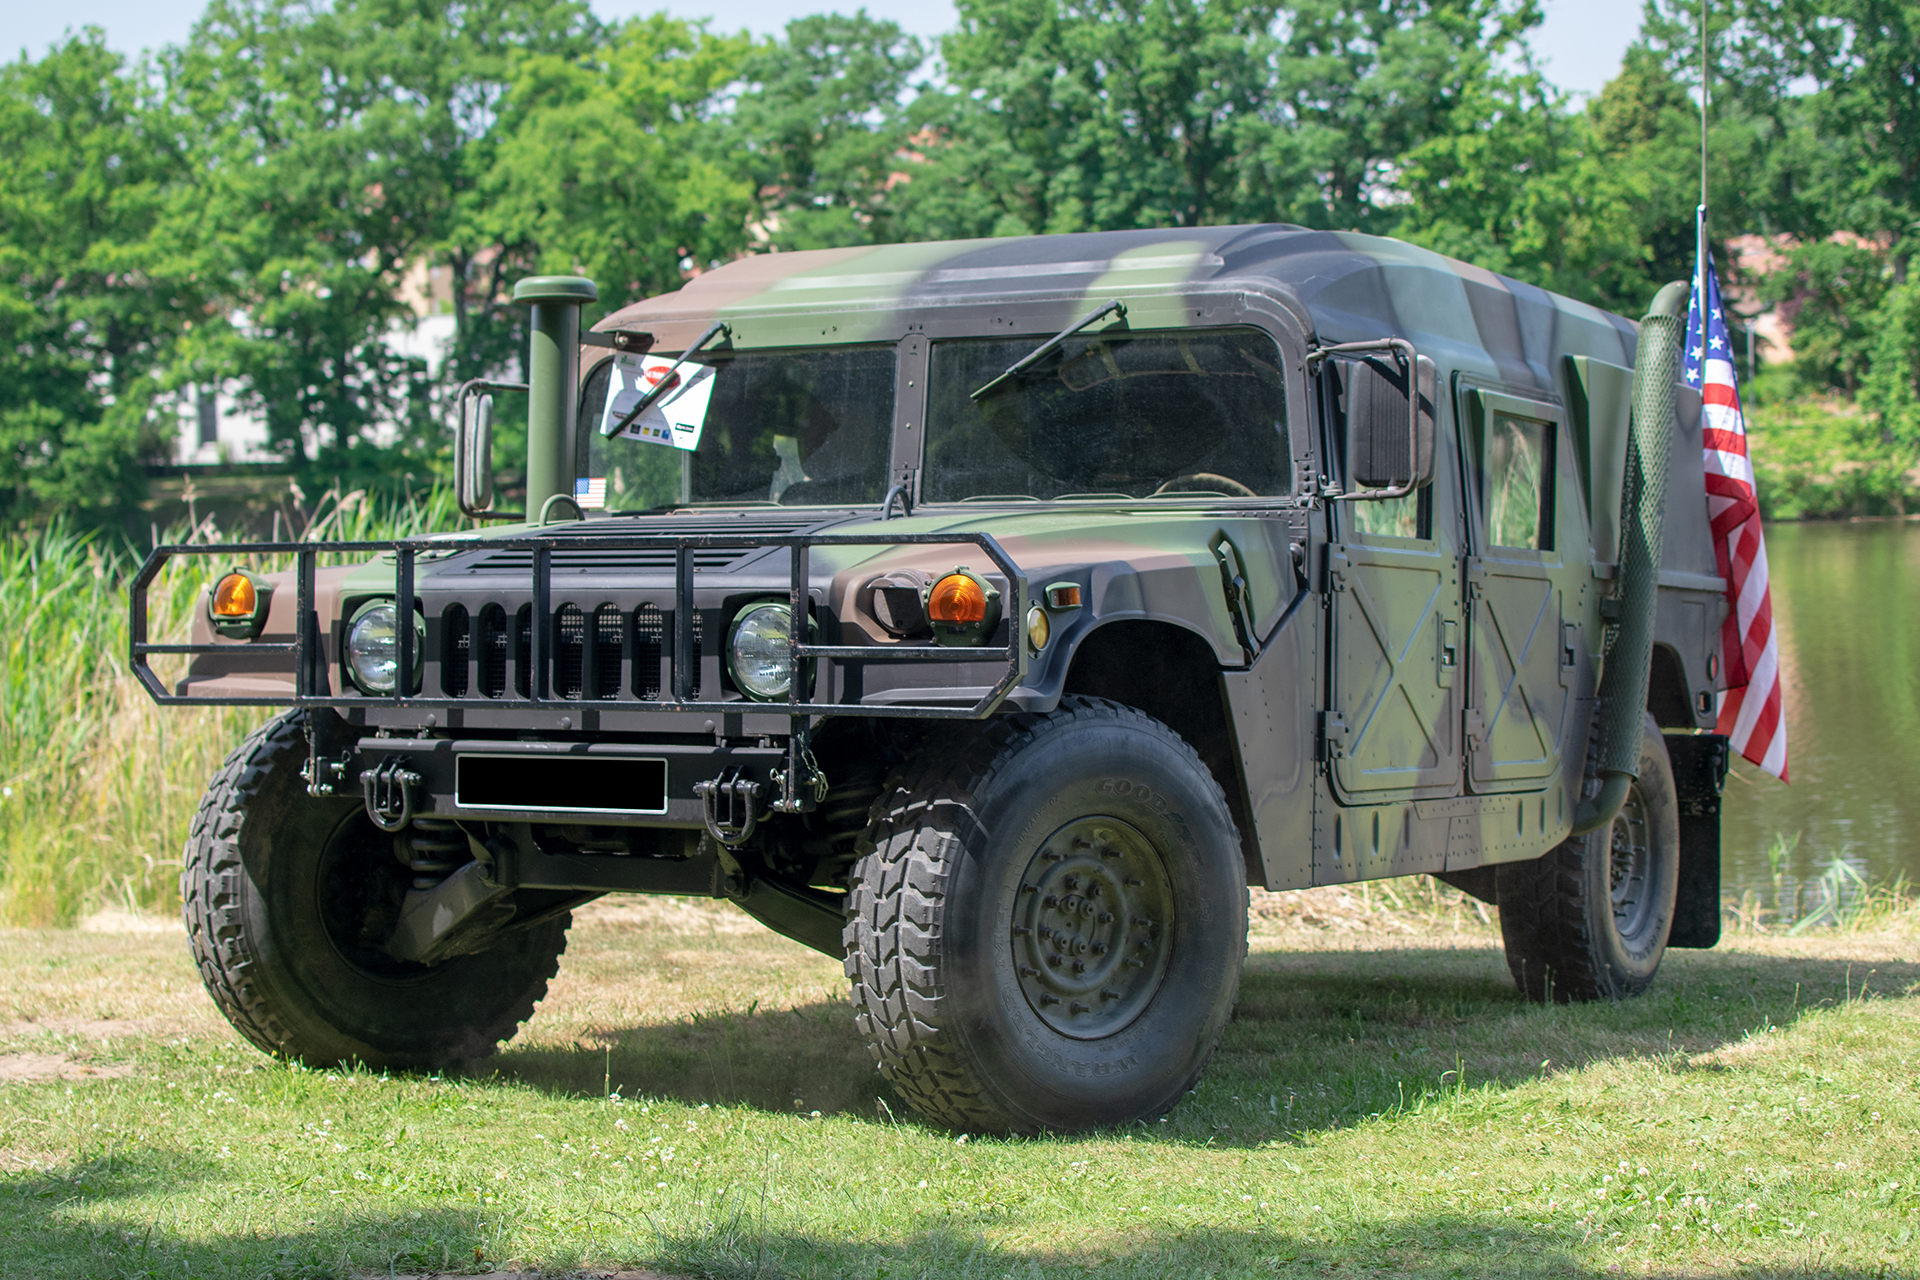 AM General HMMWV (High Mobility Multipurpose Wheeled Vehicle) Humvee